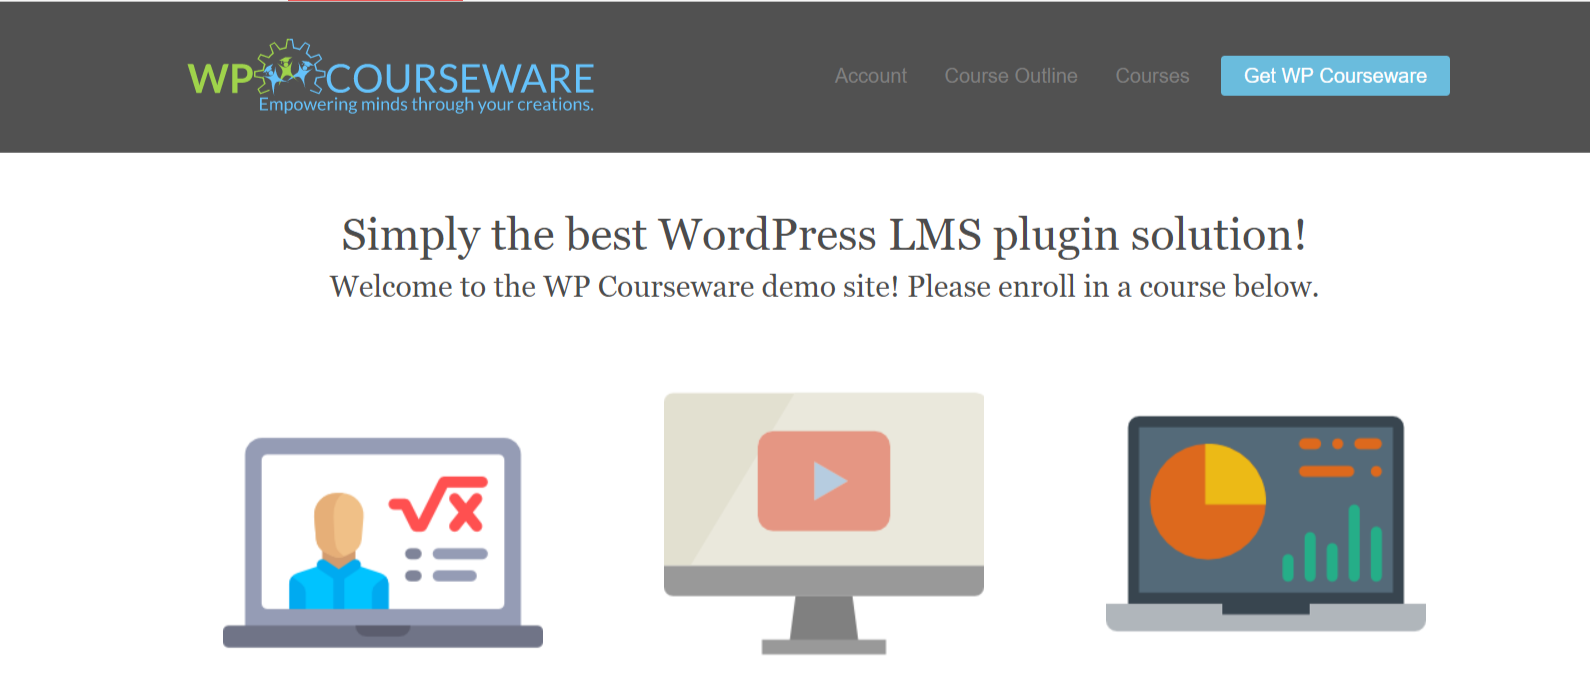 WP Courseware Demo – Build An Course Using WordPress